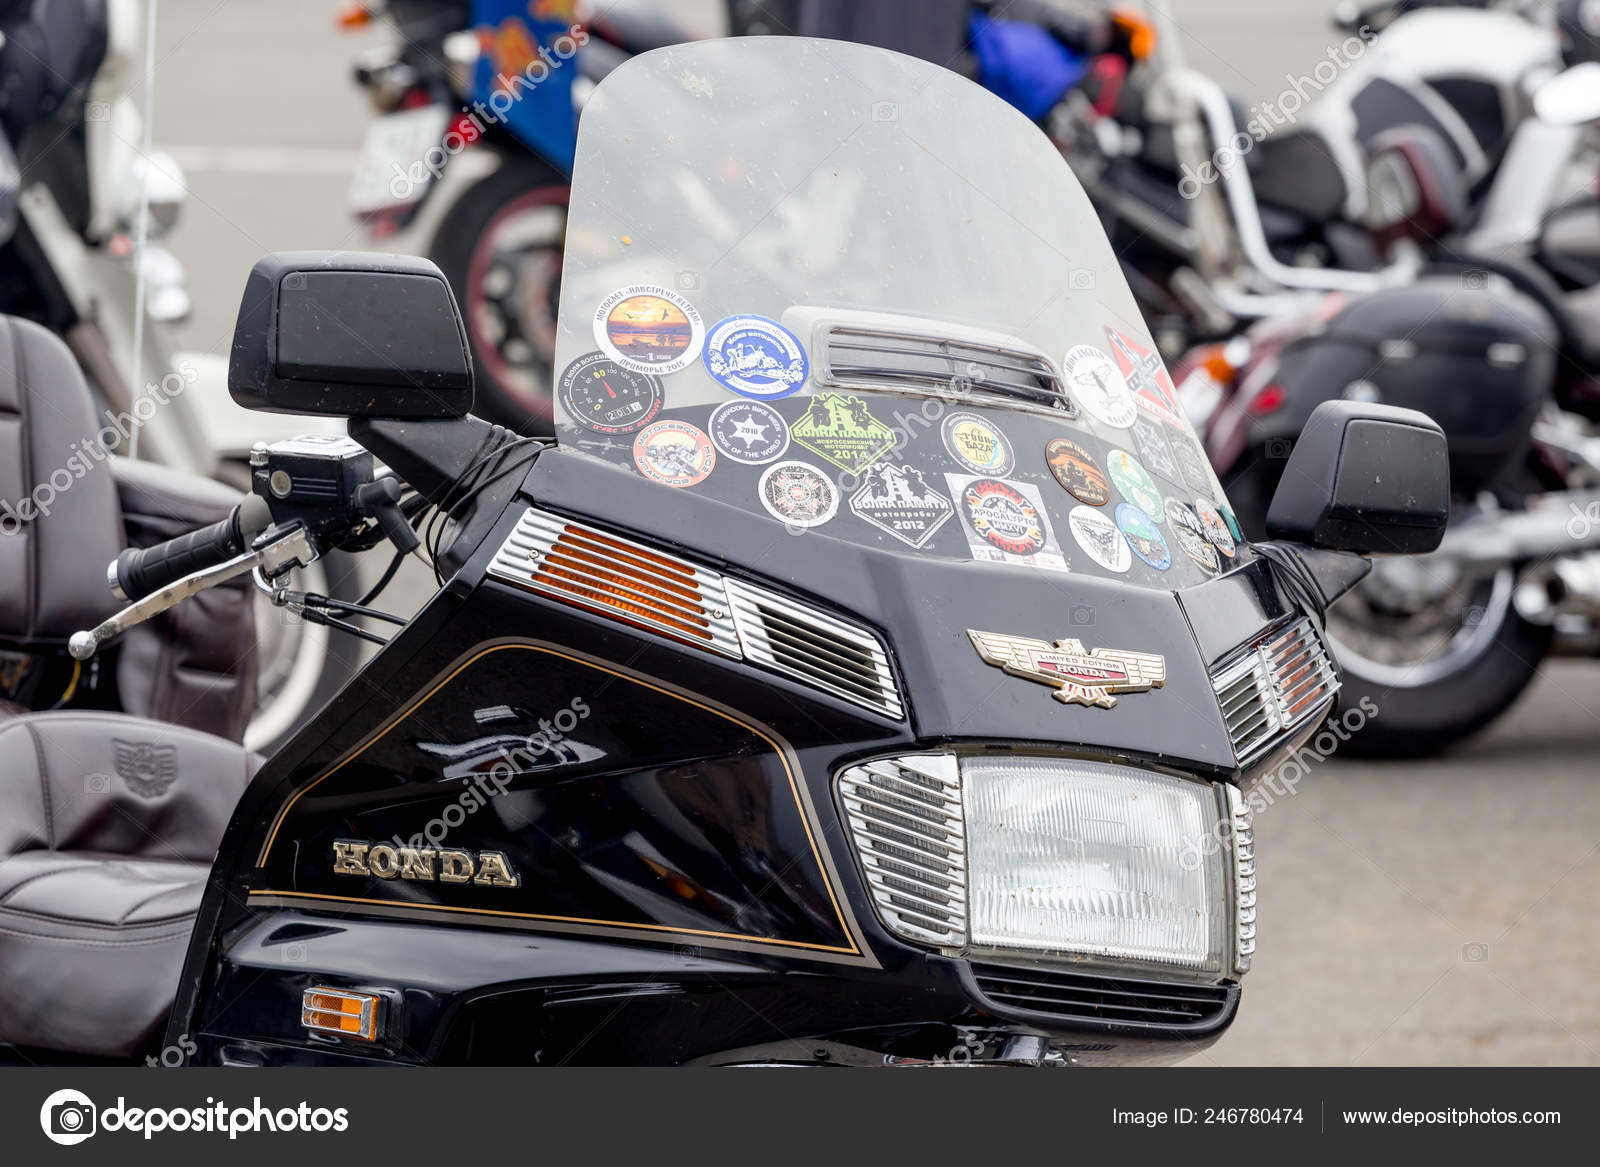 Russia Vladivostok 2018 Honda Goldwing 1200 Motorbike Motorcycle